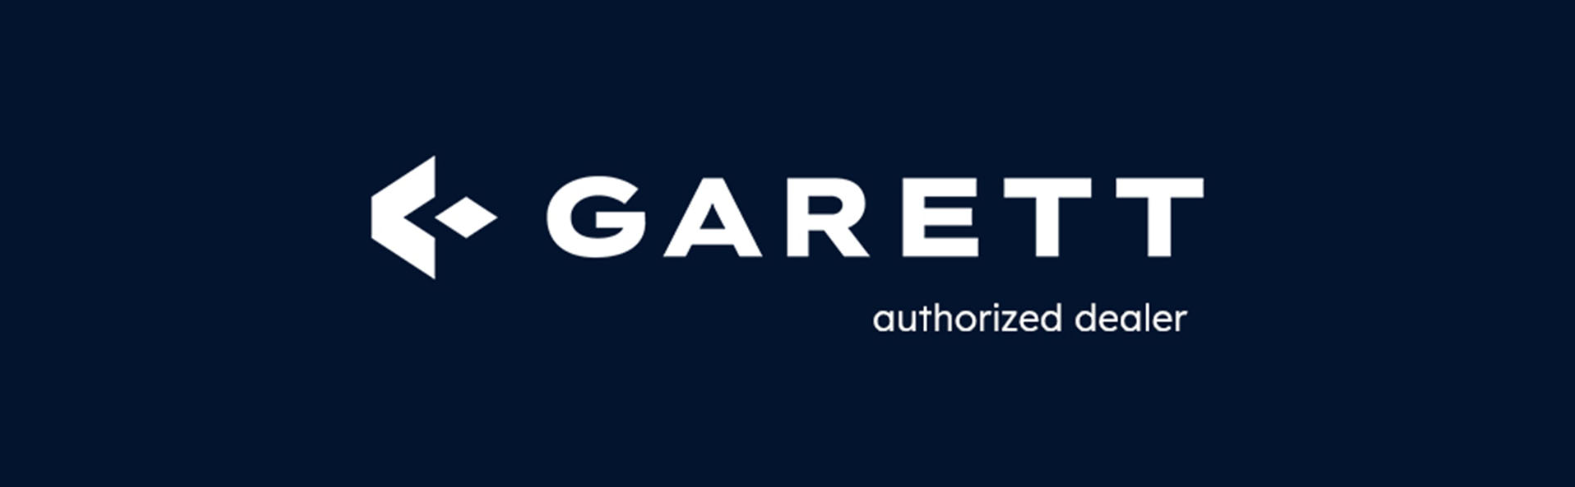 Garett Beauty Lift Skin Garett